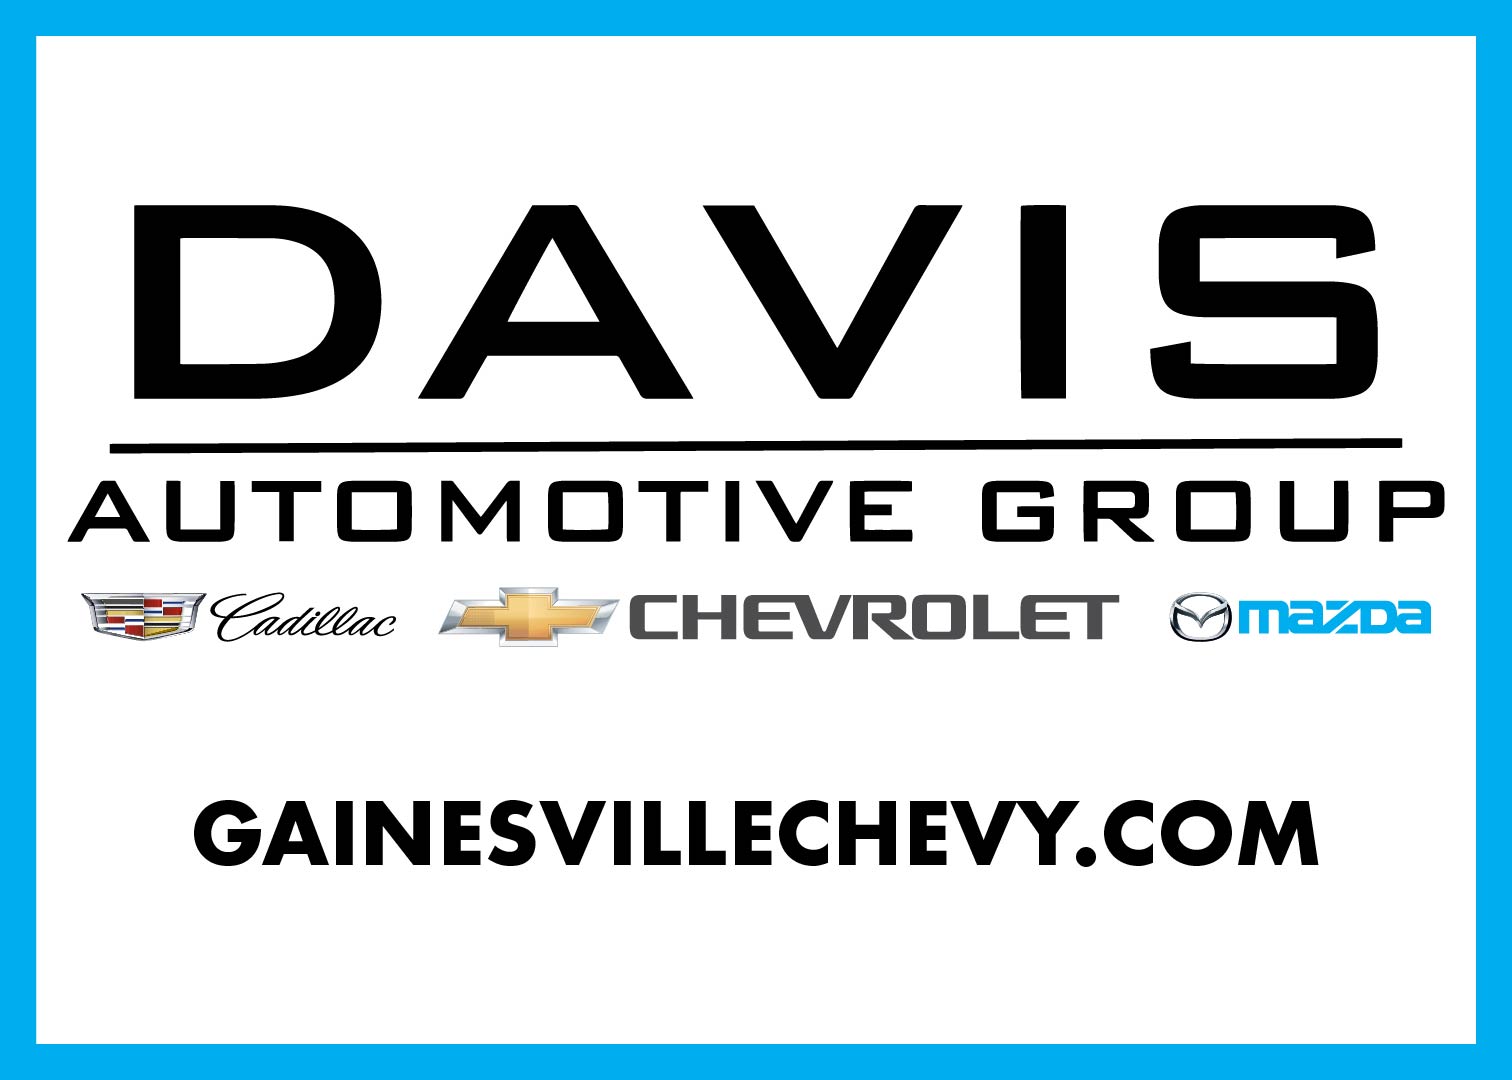 Davis Automotive Group